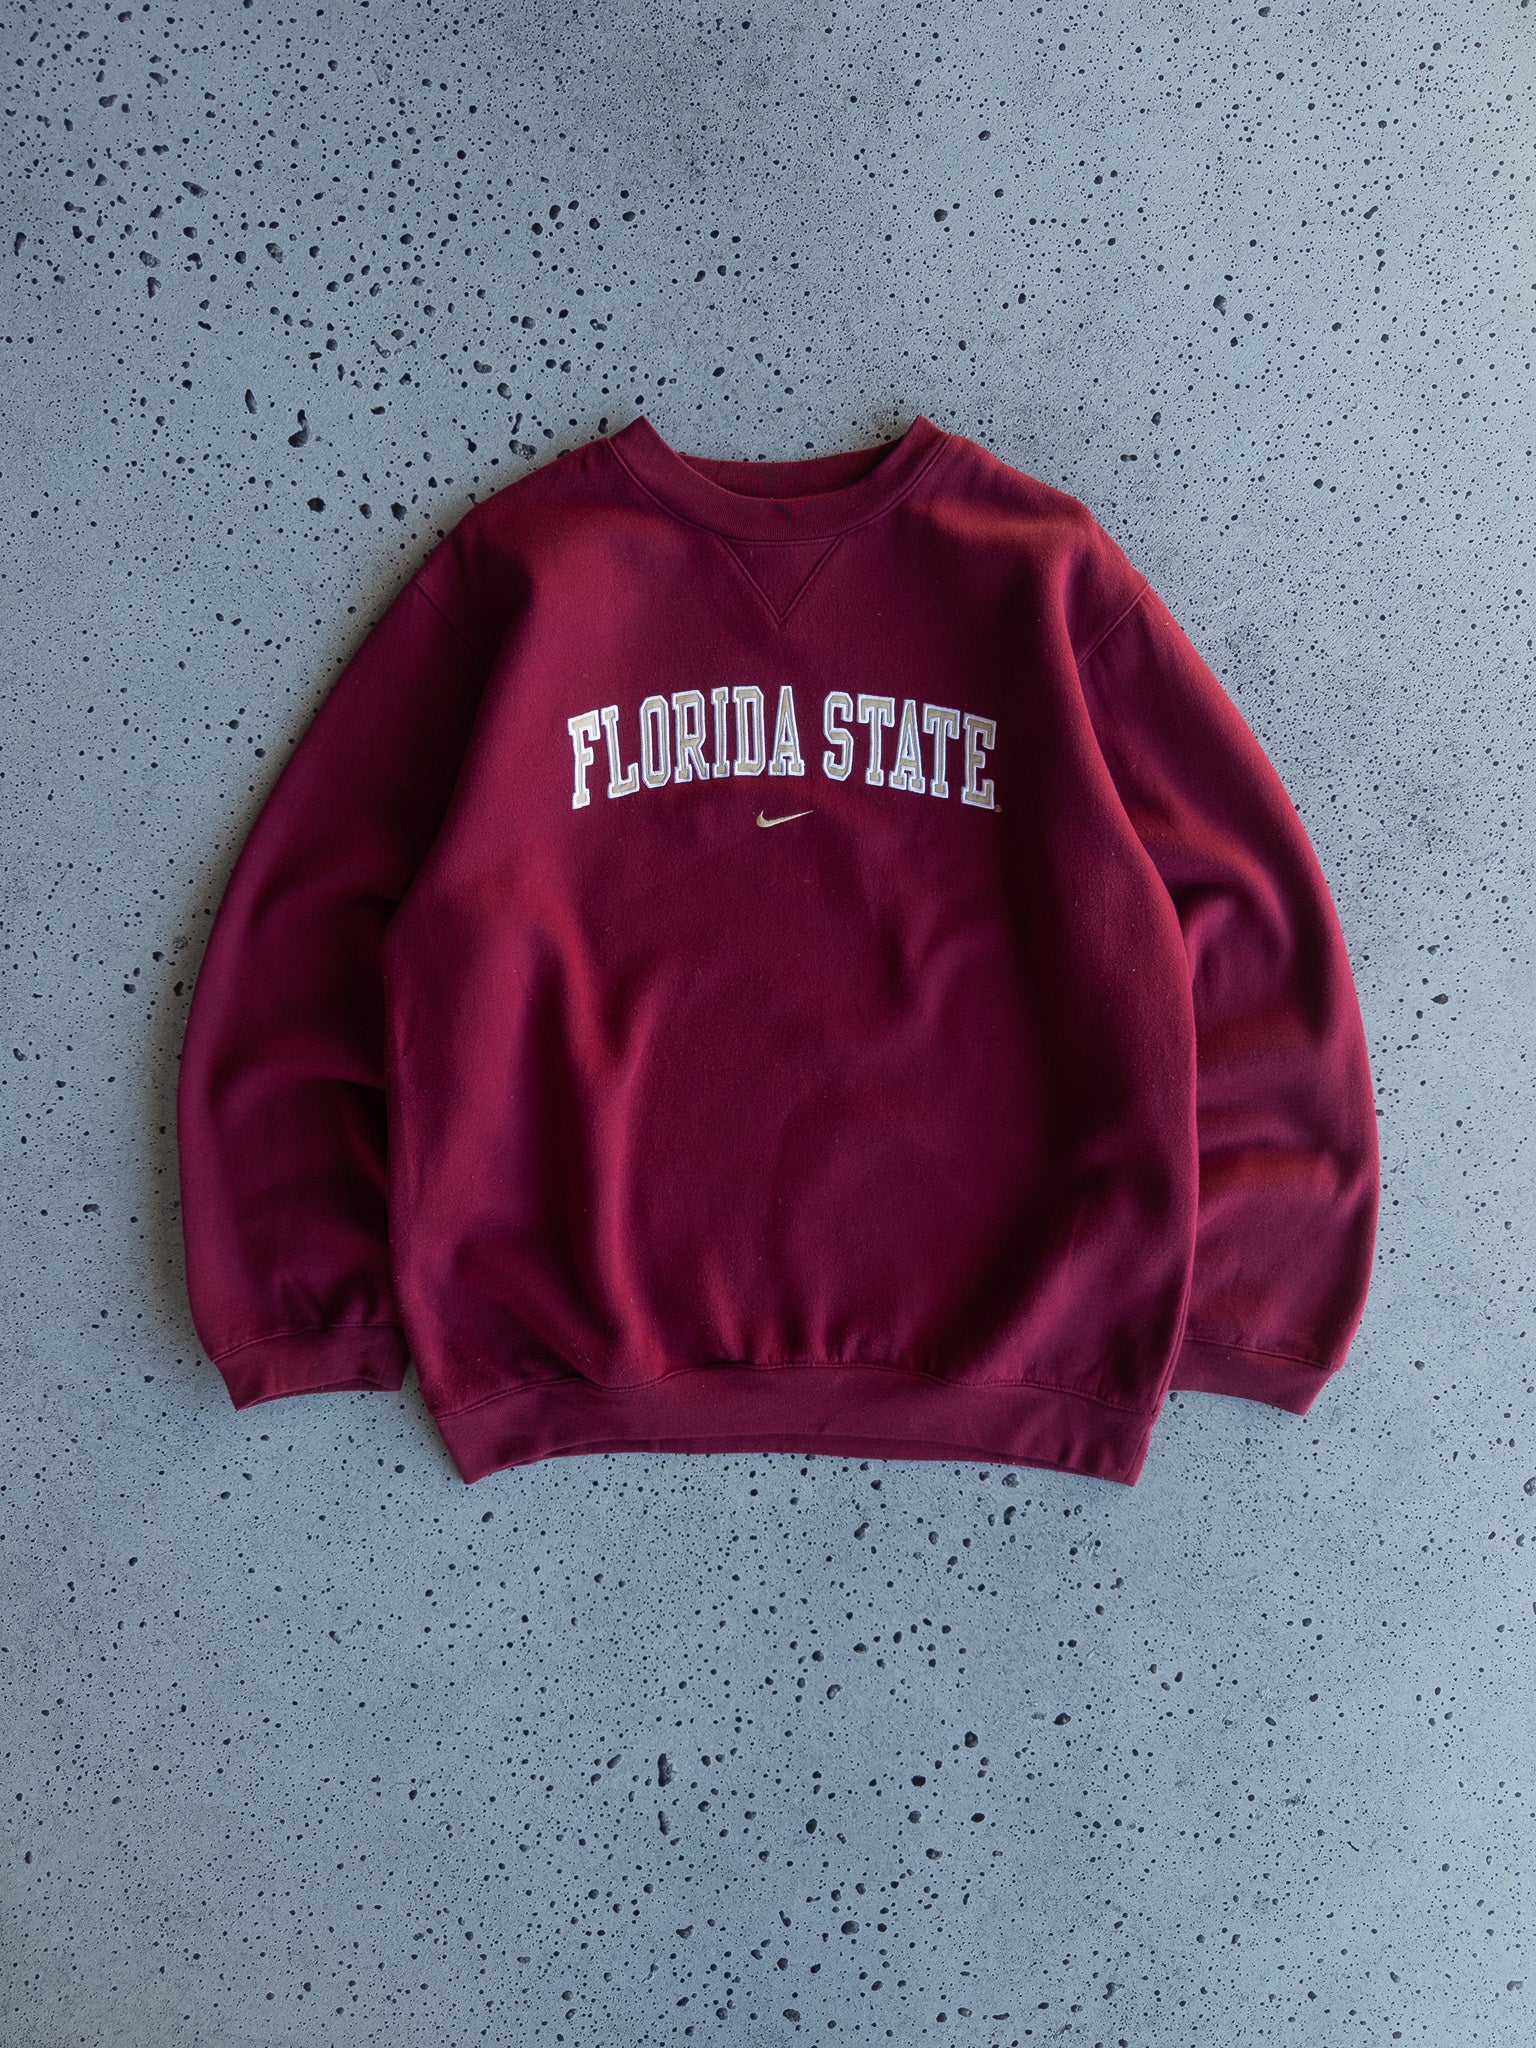 Vintage Florida State Nike Sweatshirt (M)